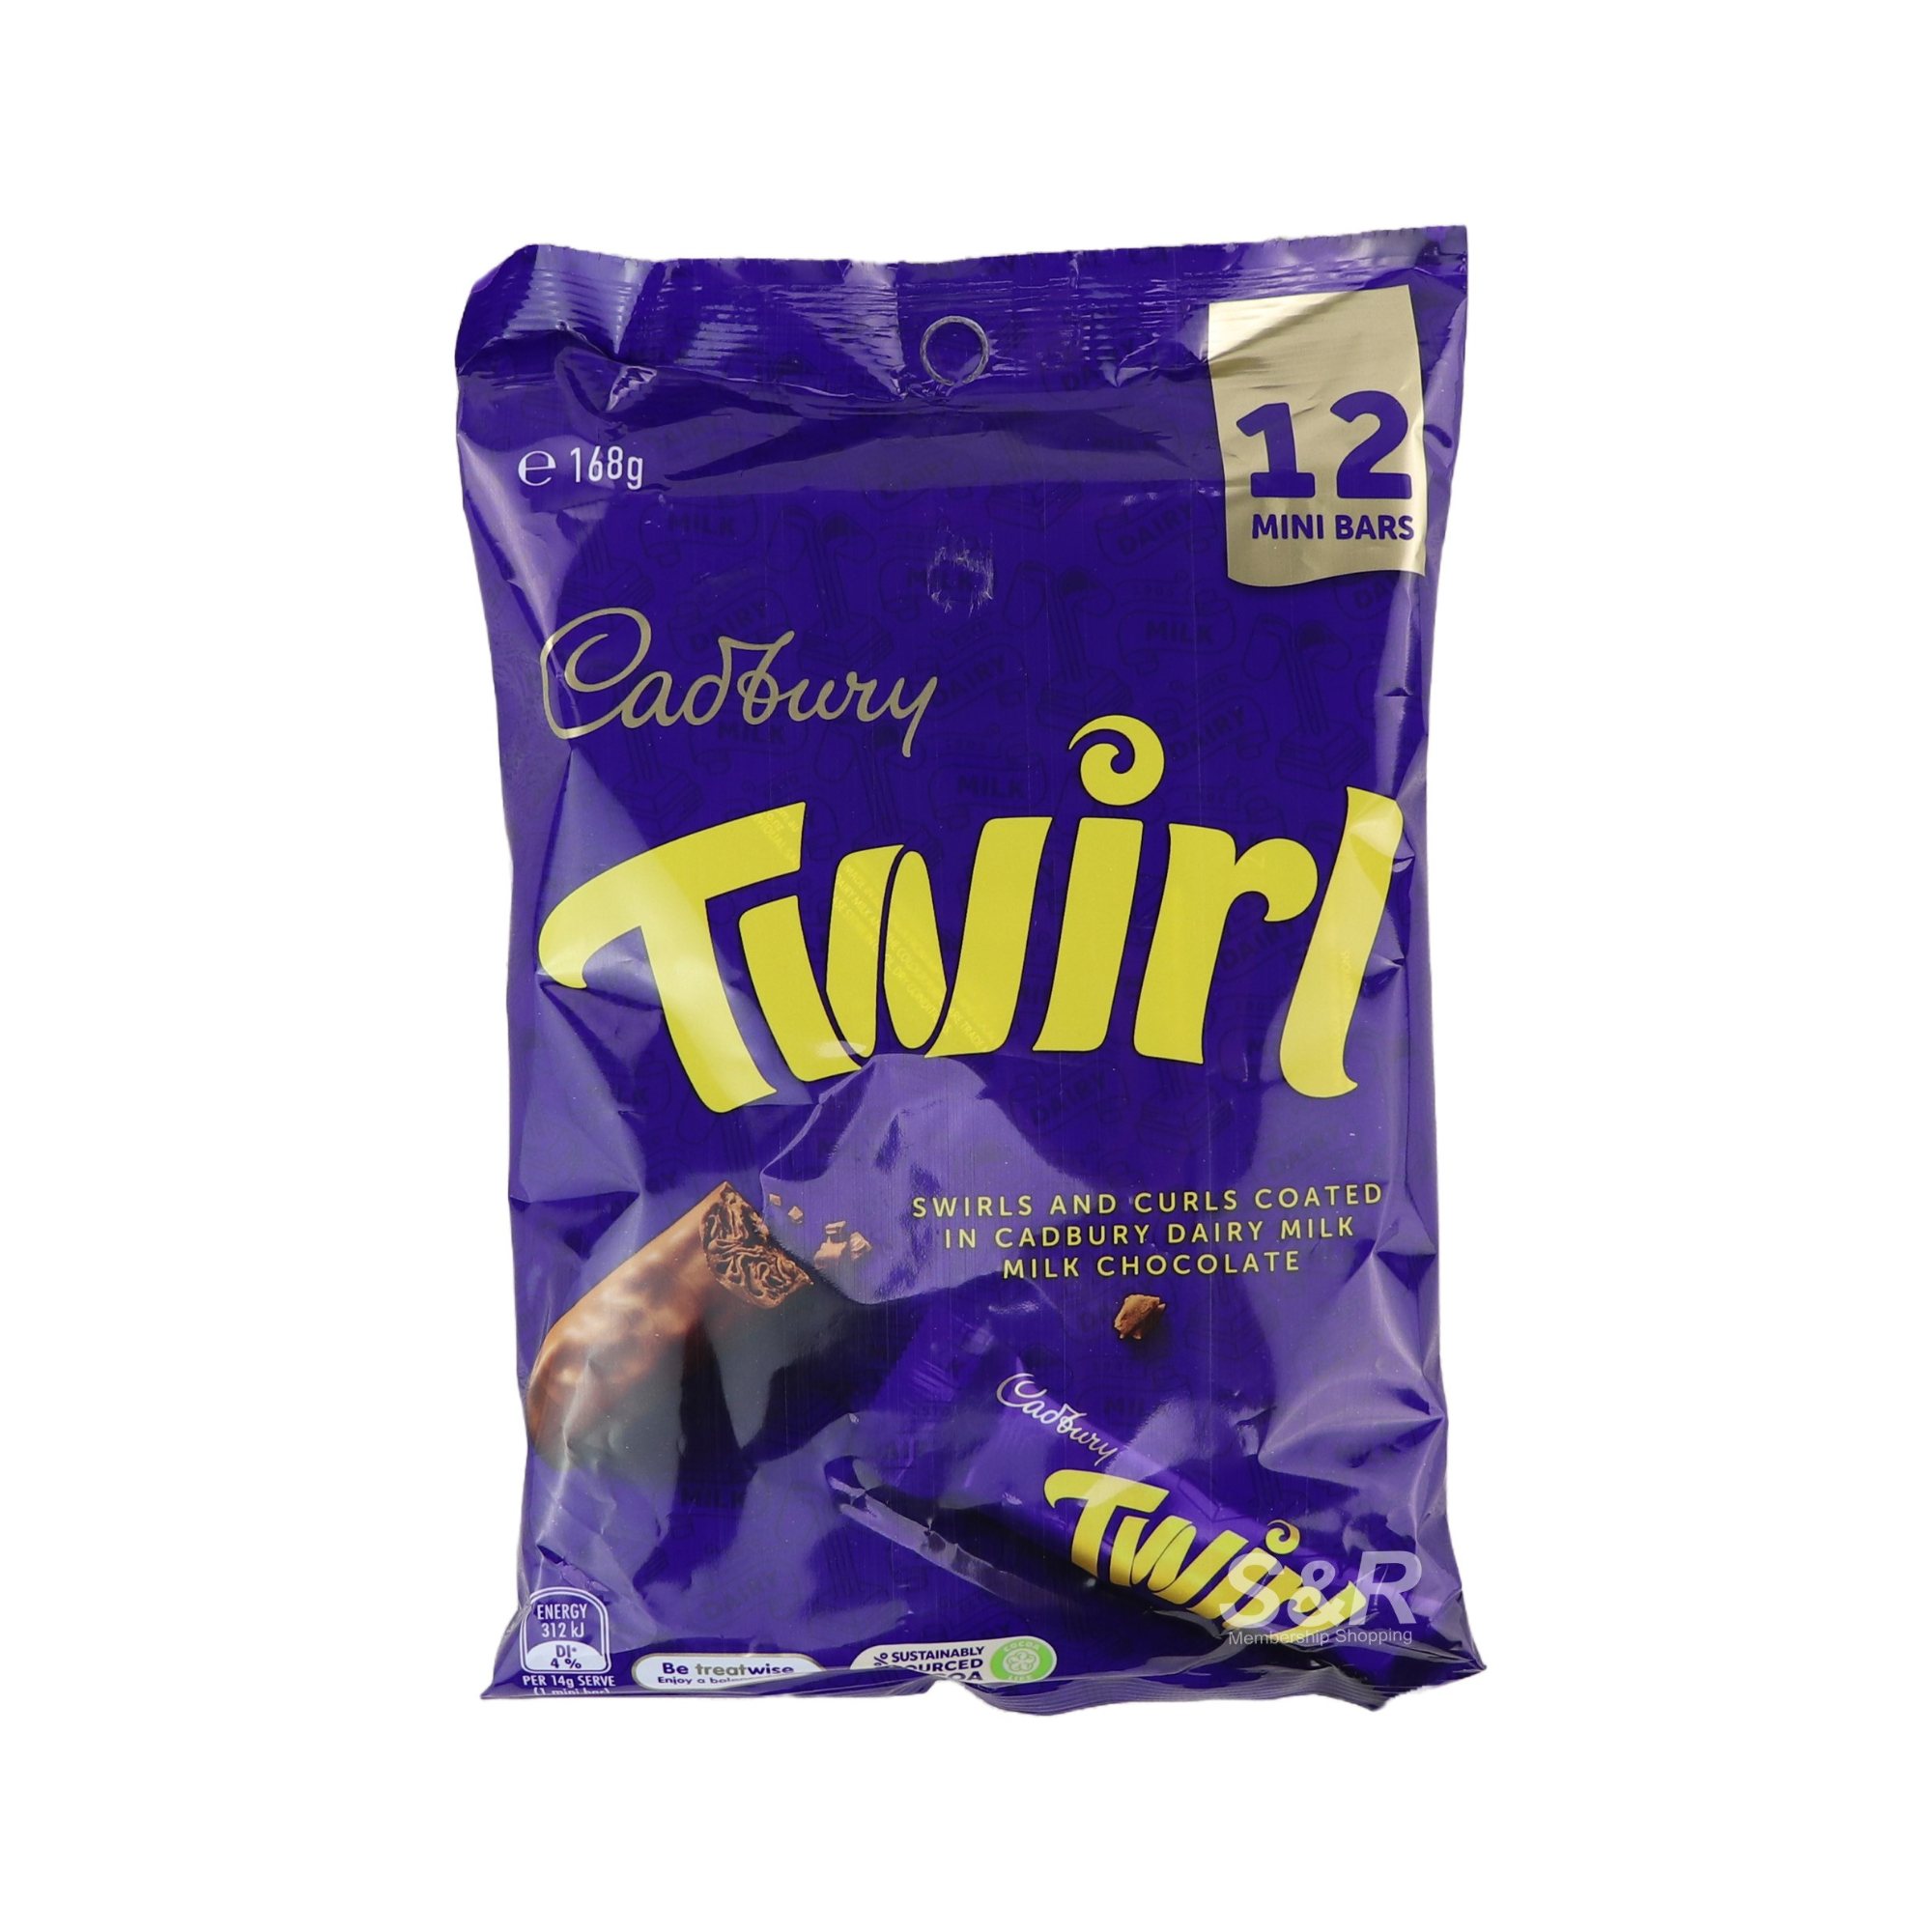 Cadbury Twirl Chocolate Bars (14g x 12pcs)